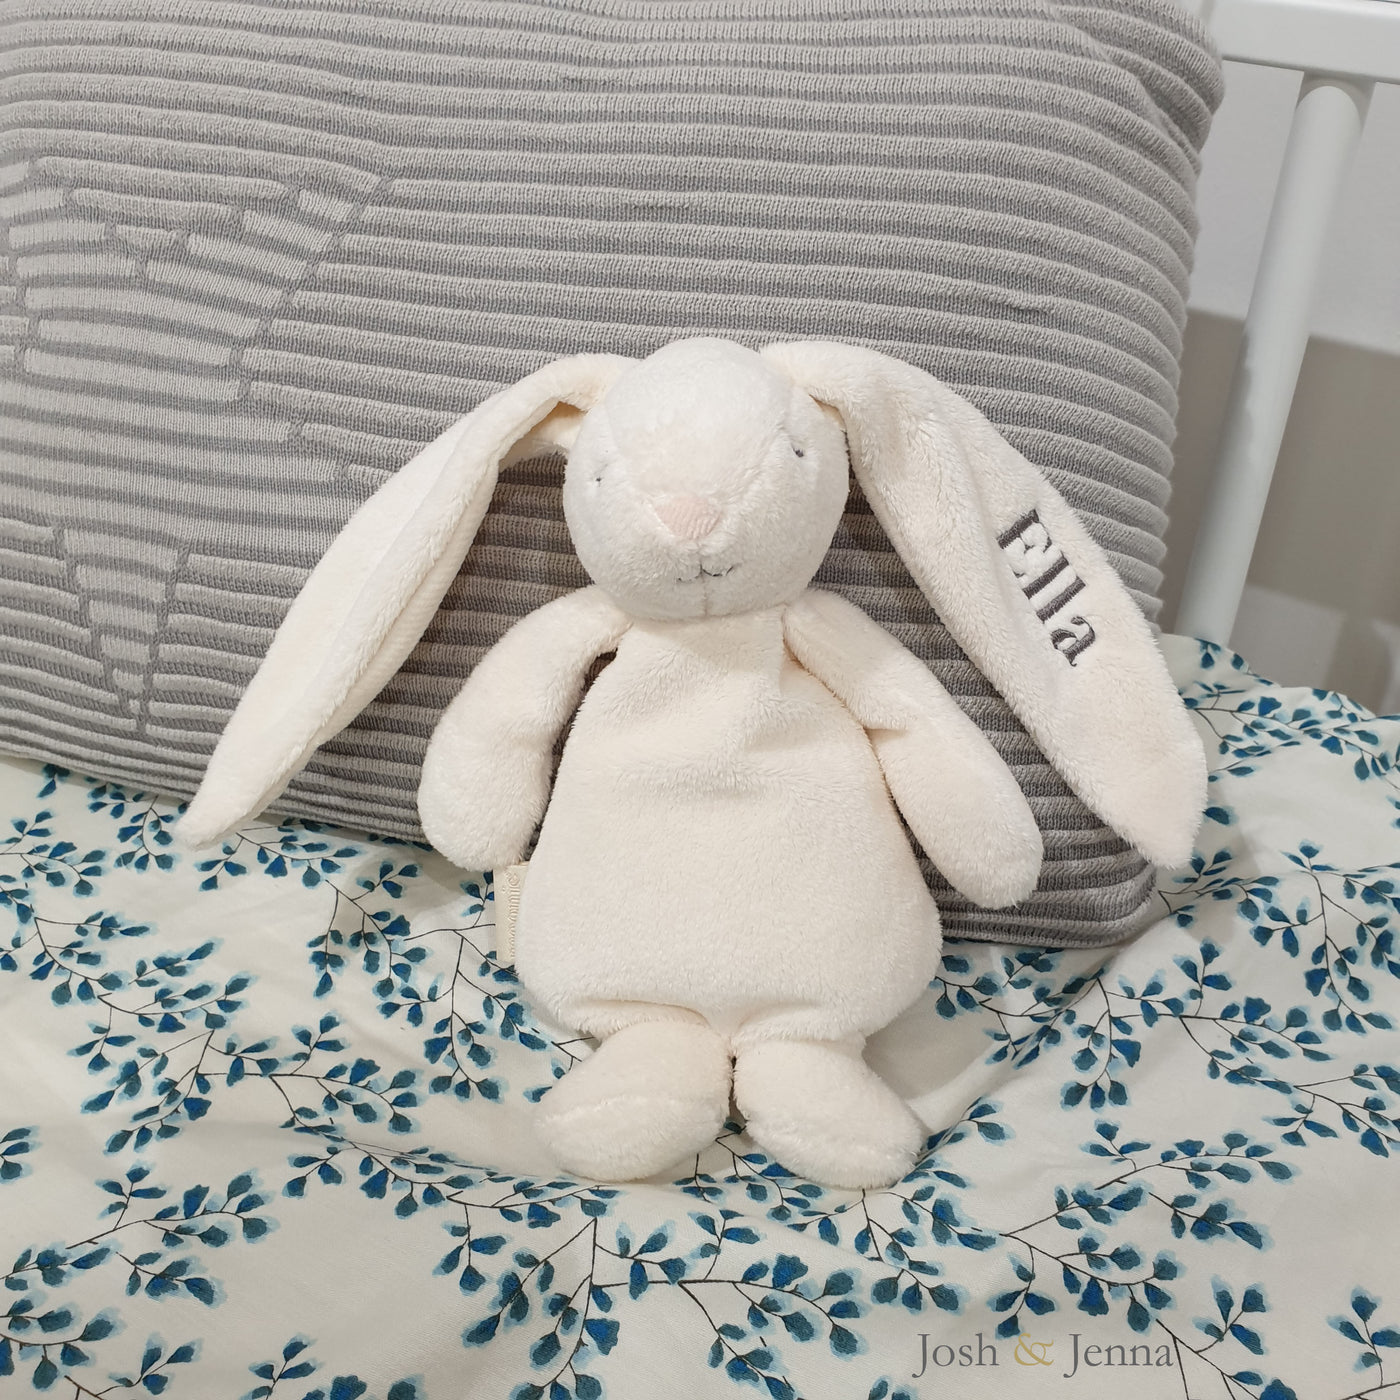 Personalised Moonie Sensory Cuddle Bunny - Cream